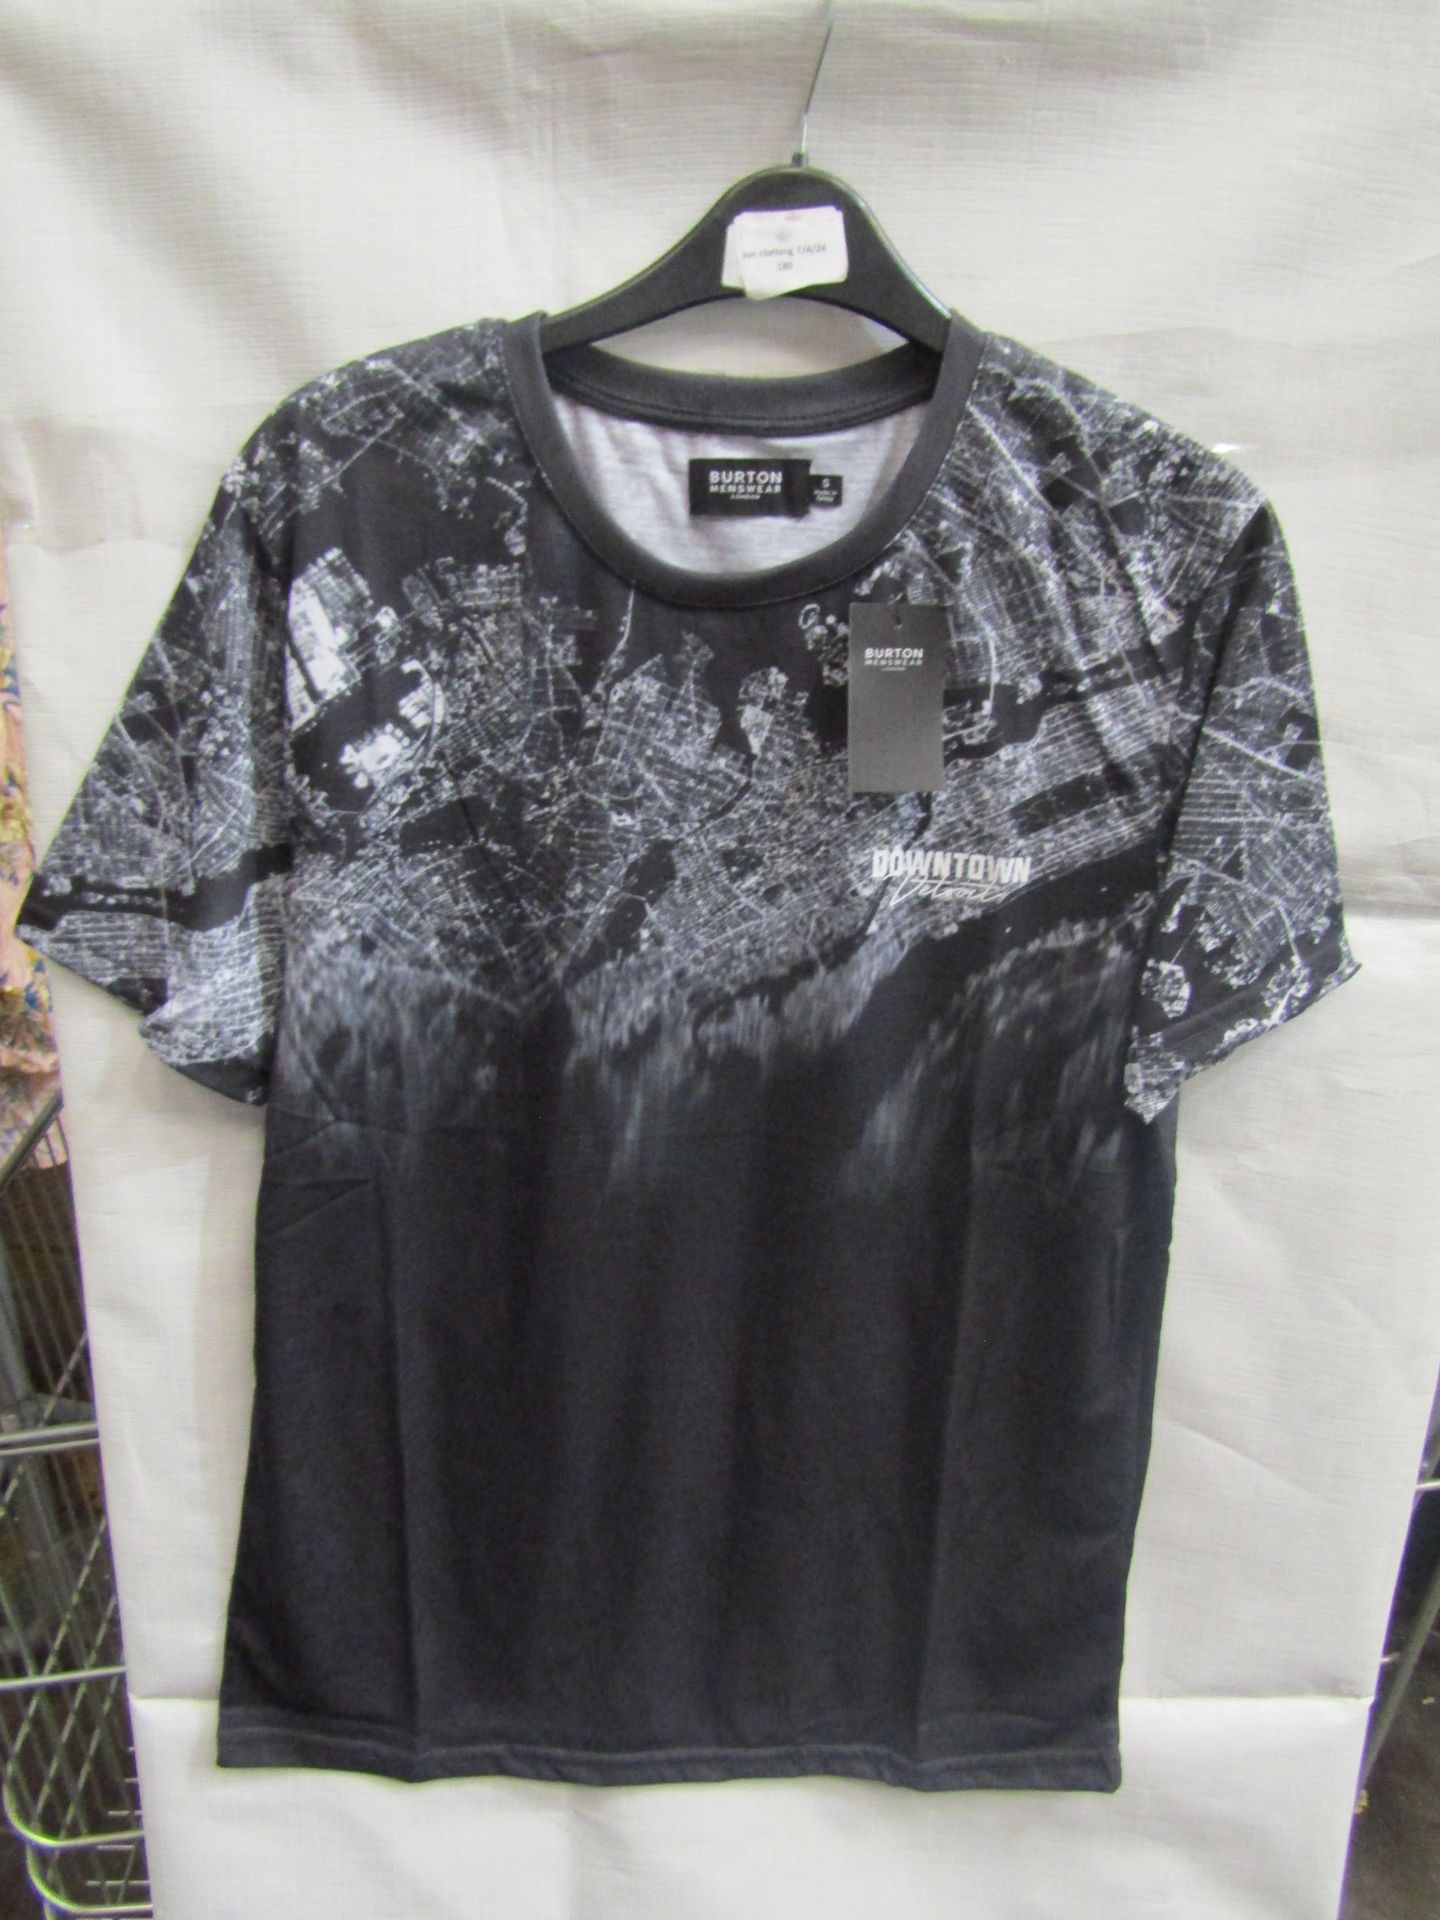 4x Burton Mens Wear Black Slim Detroit Fade T-Shirt, Size Small, New & Packaged.